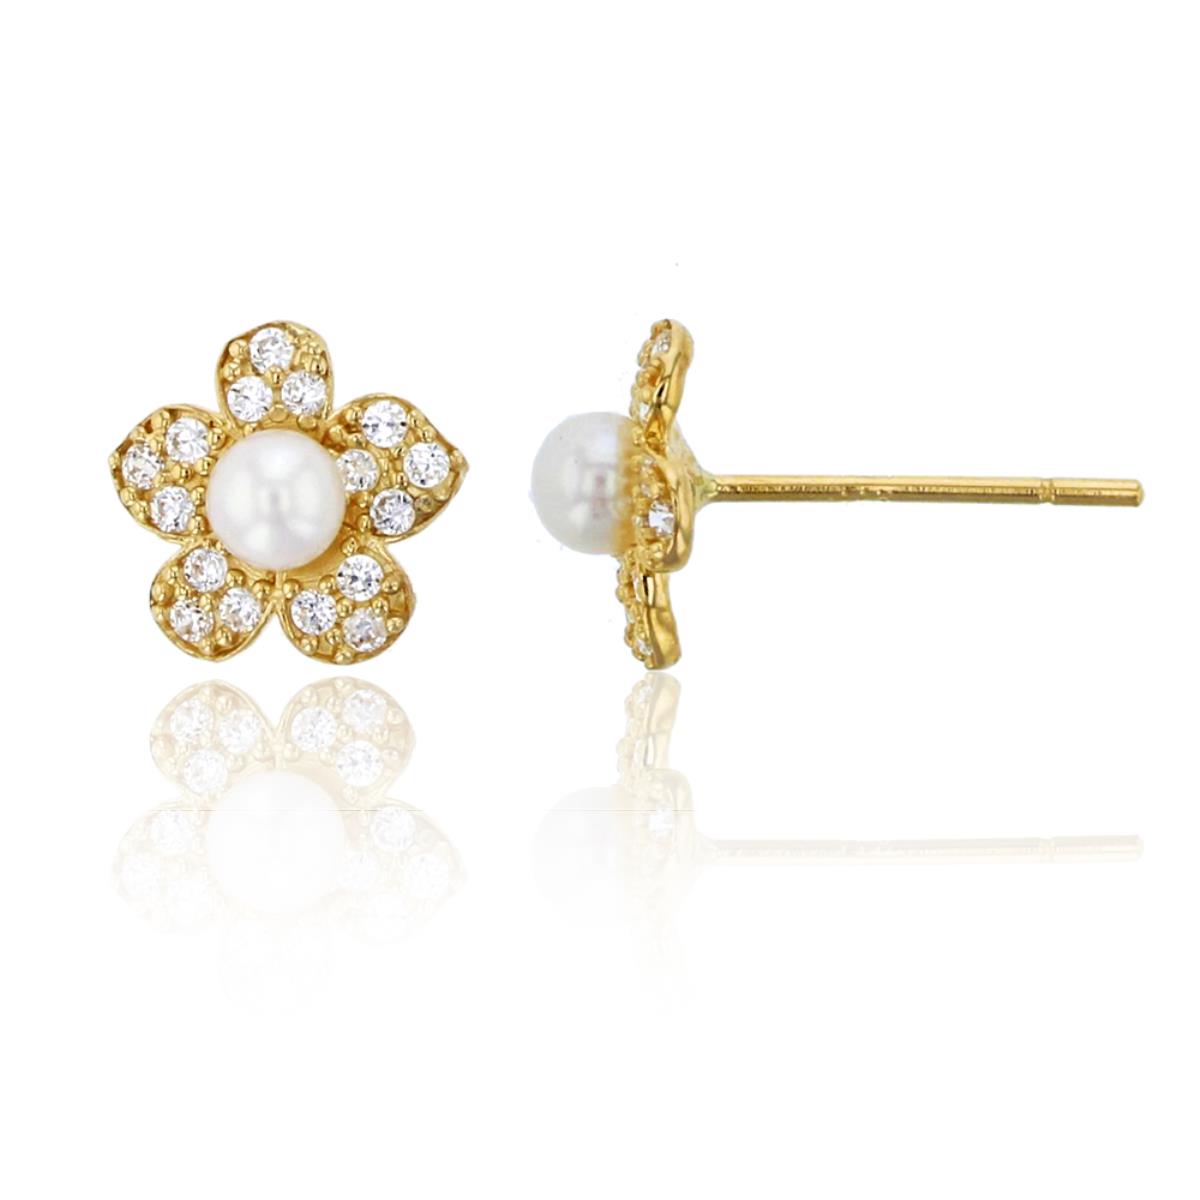 10K Yellow Gold 3mm Fresh Water Pearl & CZ Flower Stud Earring